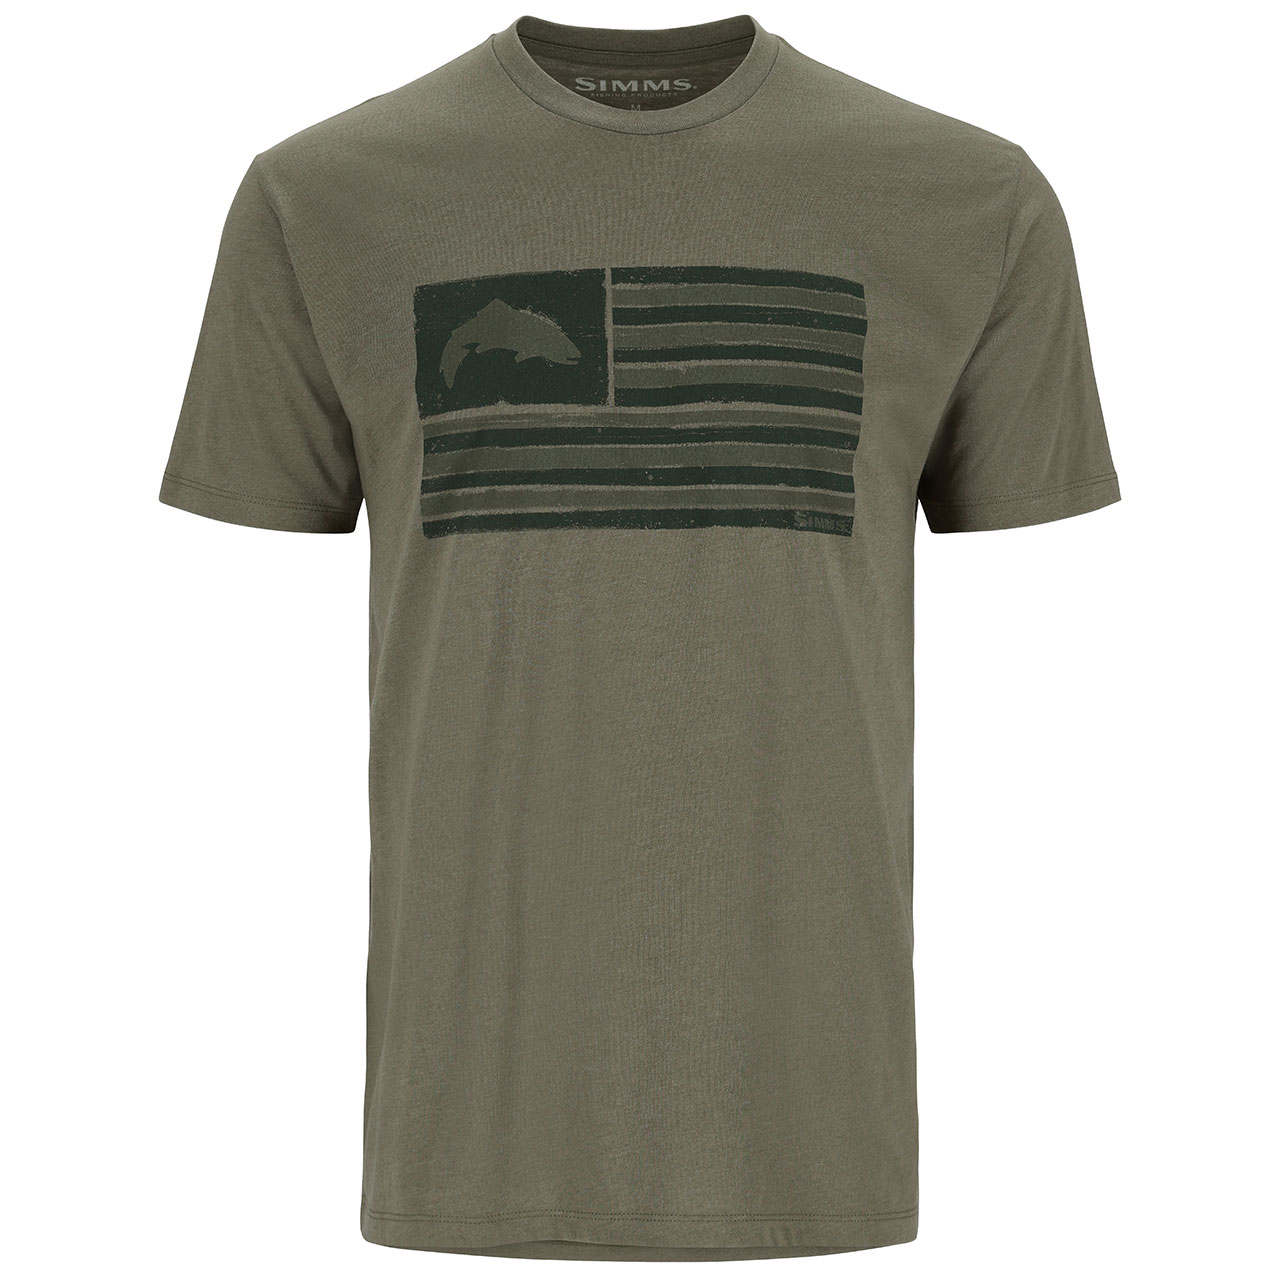 Simms Men's Americana T-Shirt - Military Heather,S